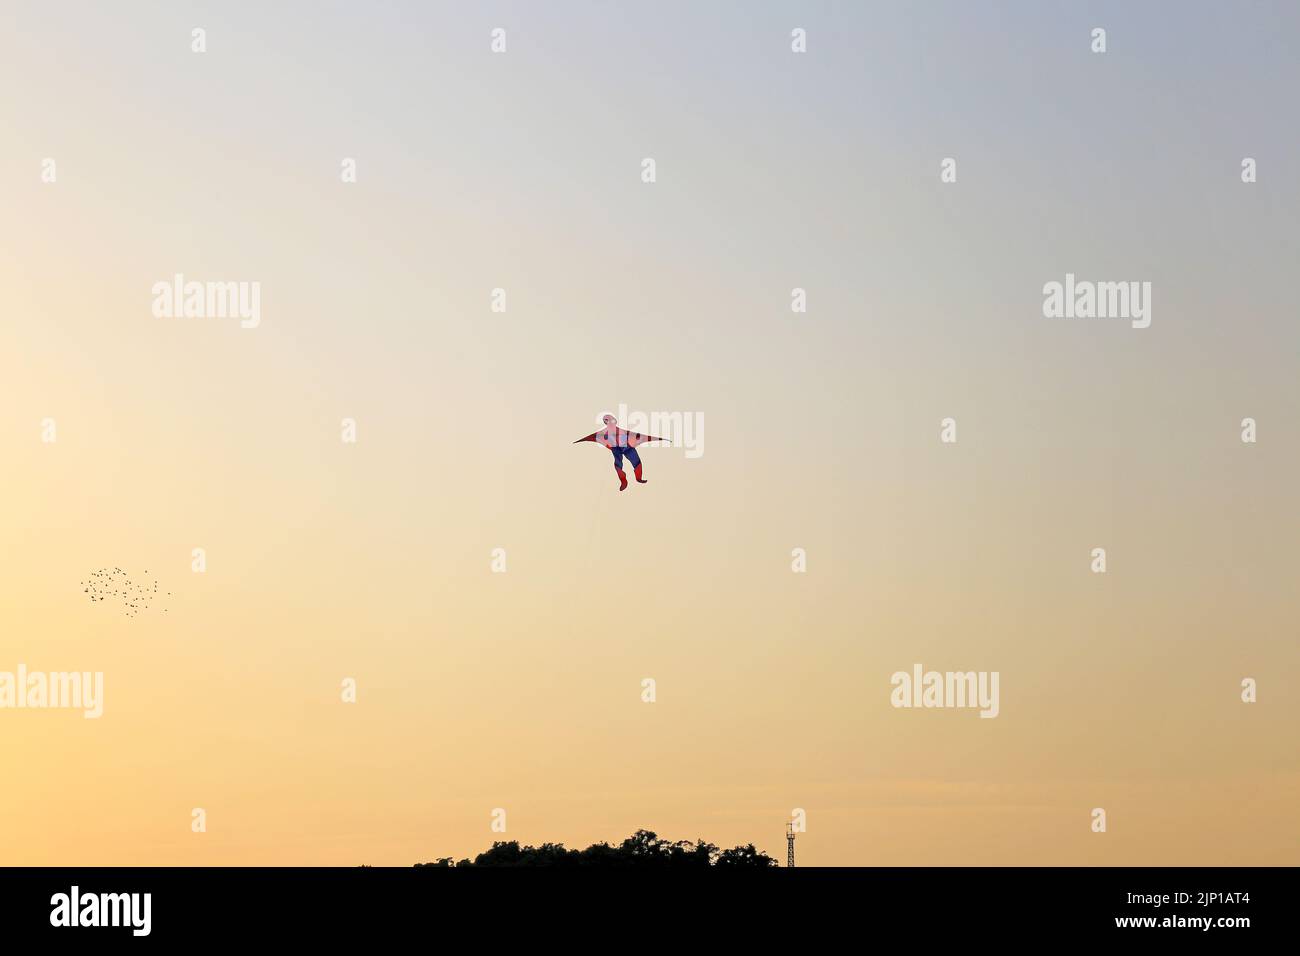 Simple background with orange sky Stock Photo